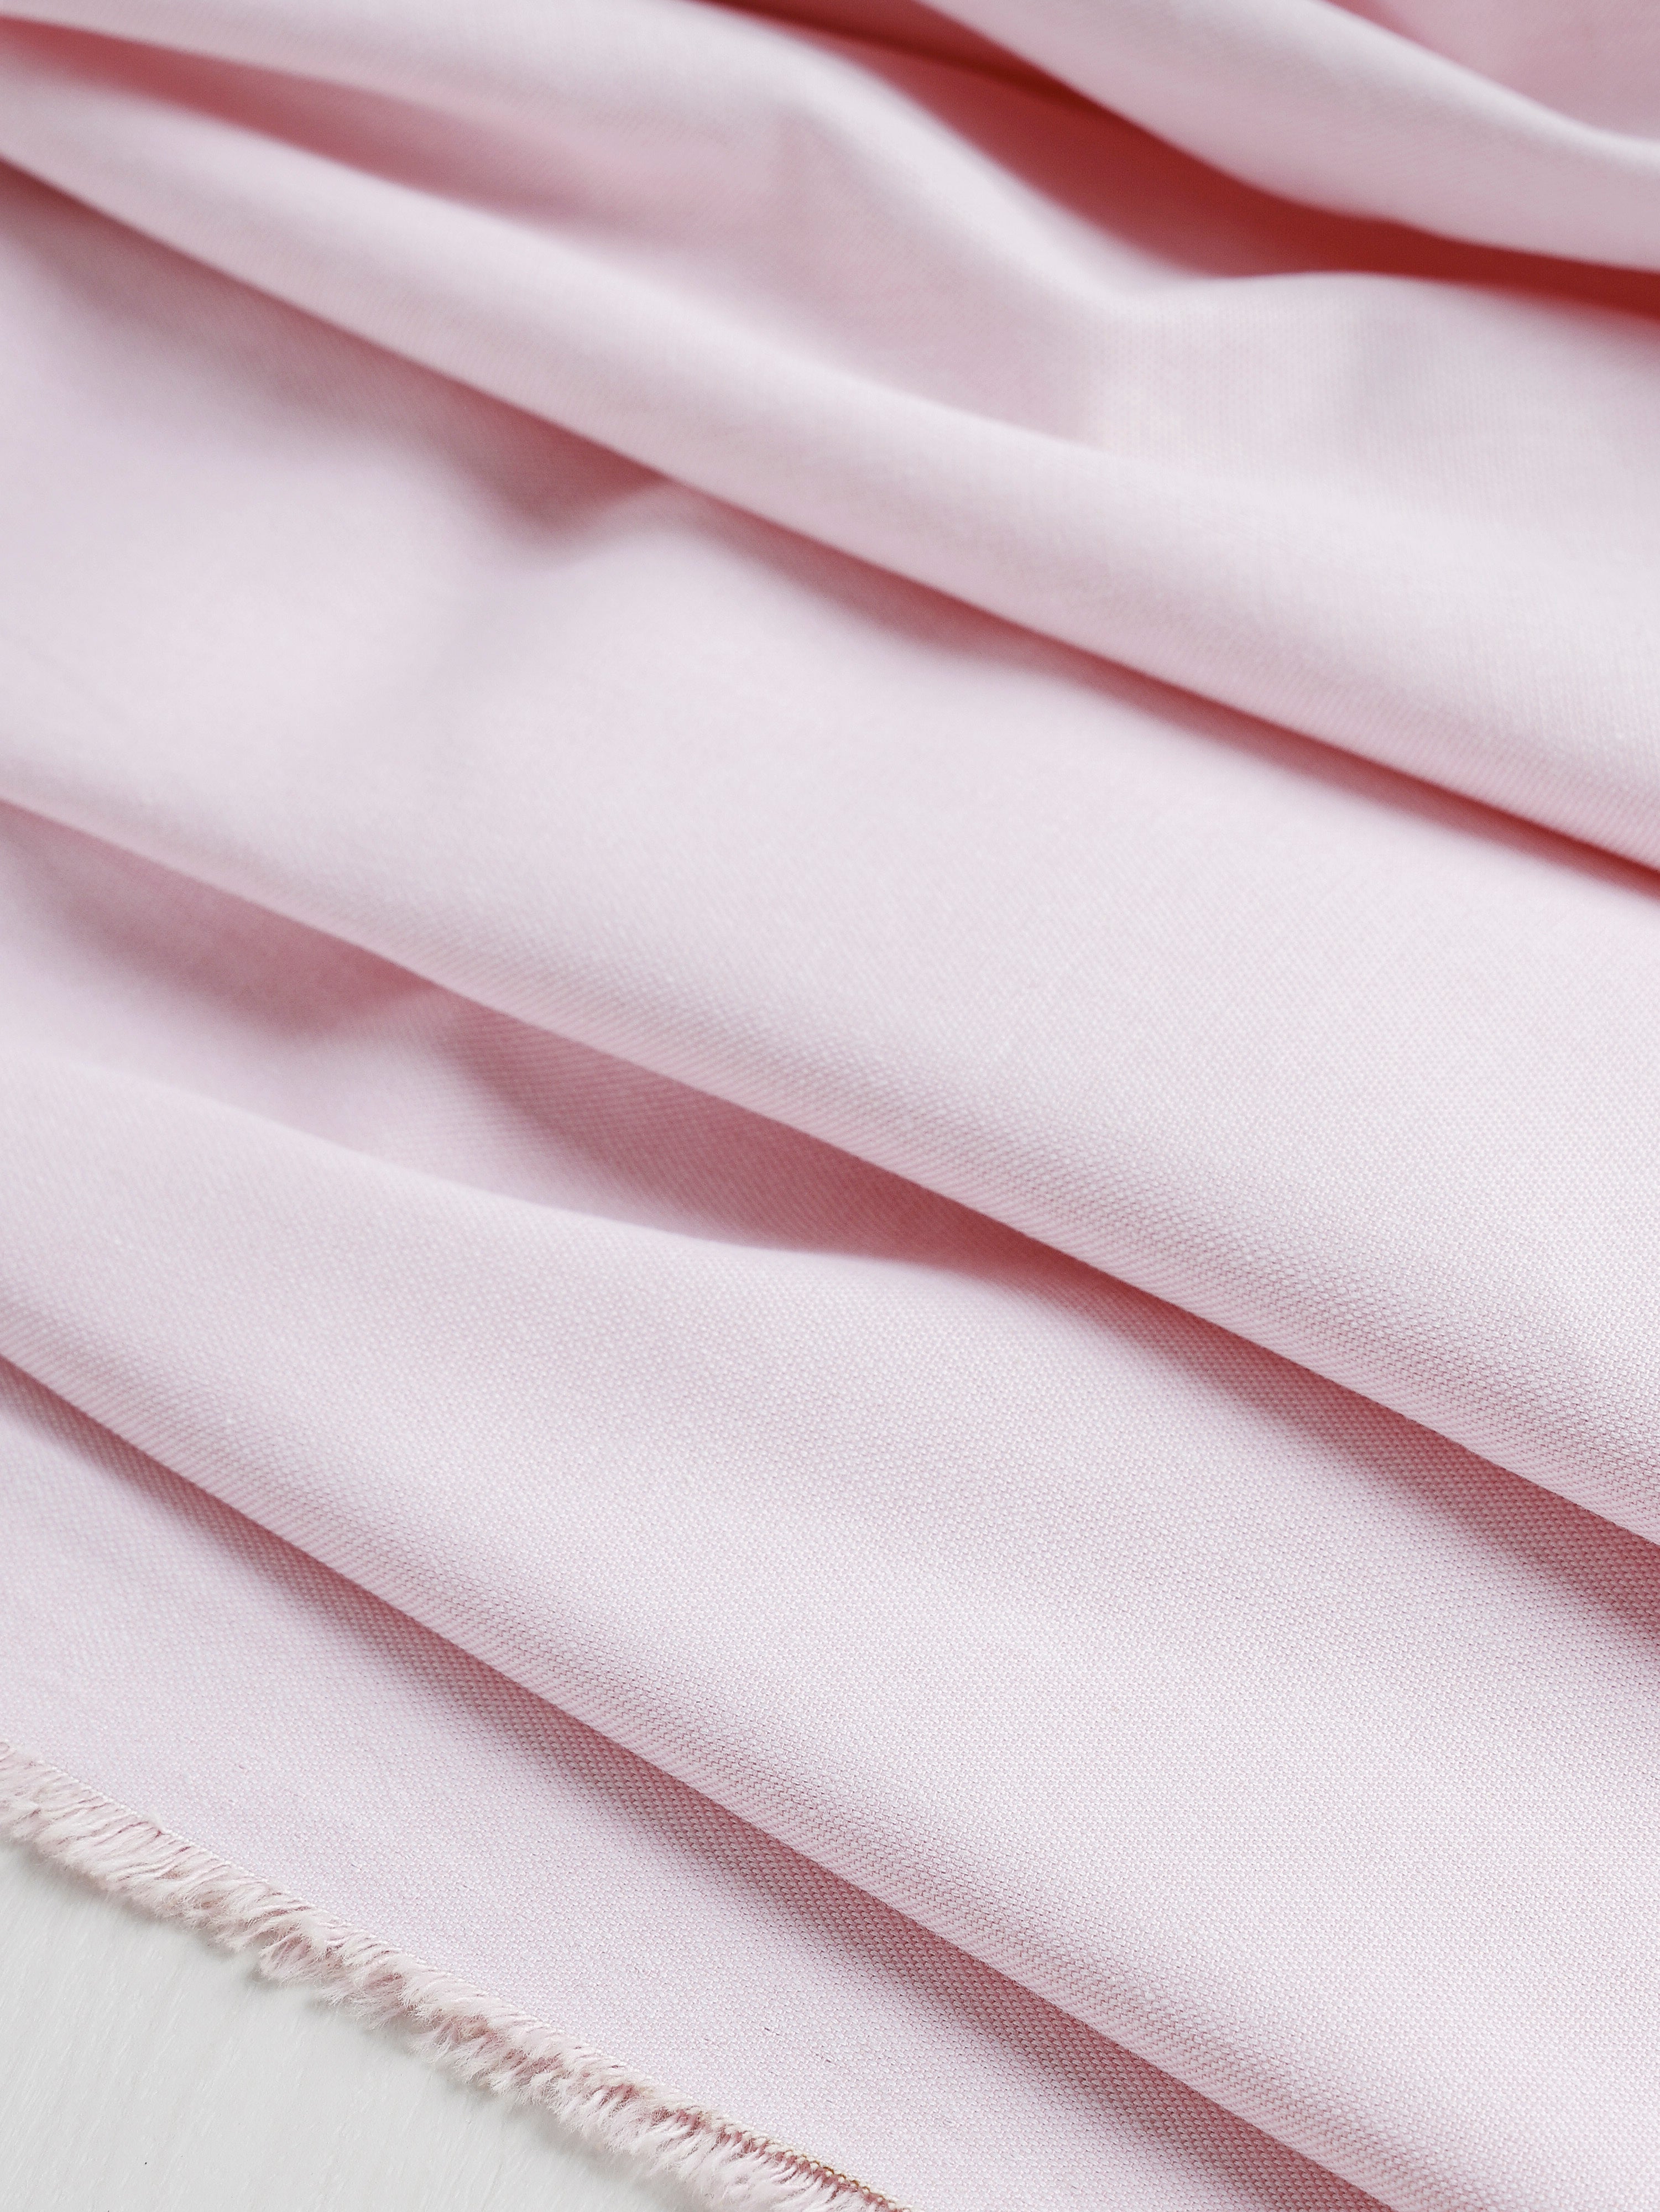 Blush Pink Lining Fabric -  Canada